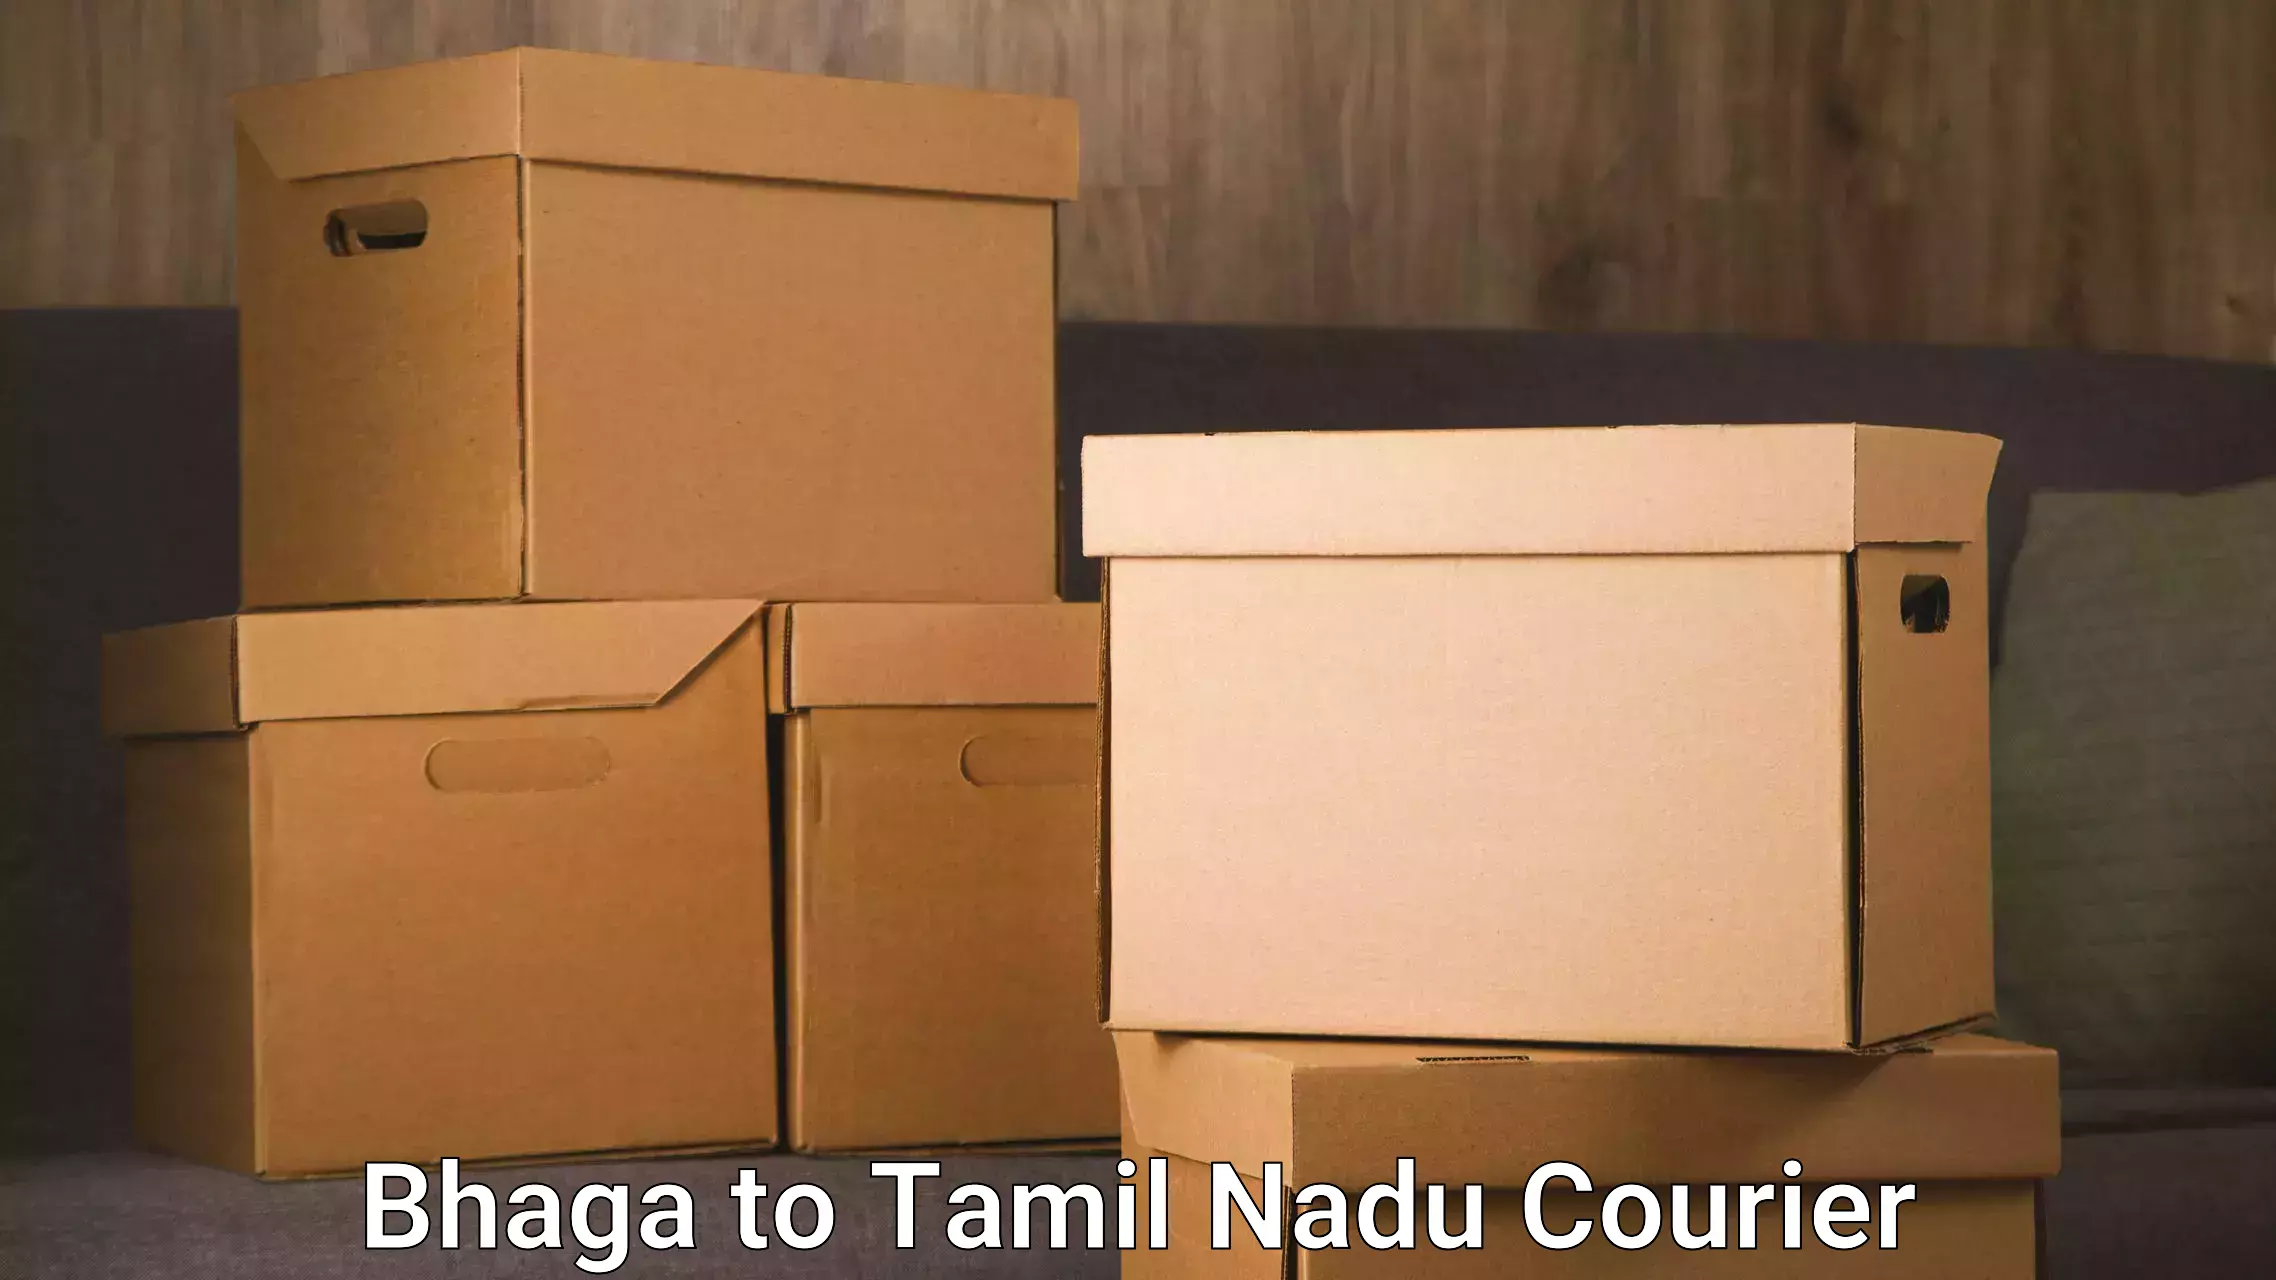 Specialized shipment handling Bhaga to Tamil Nadu